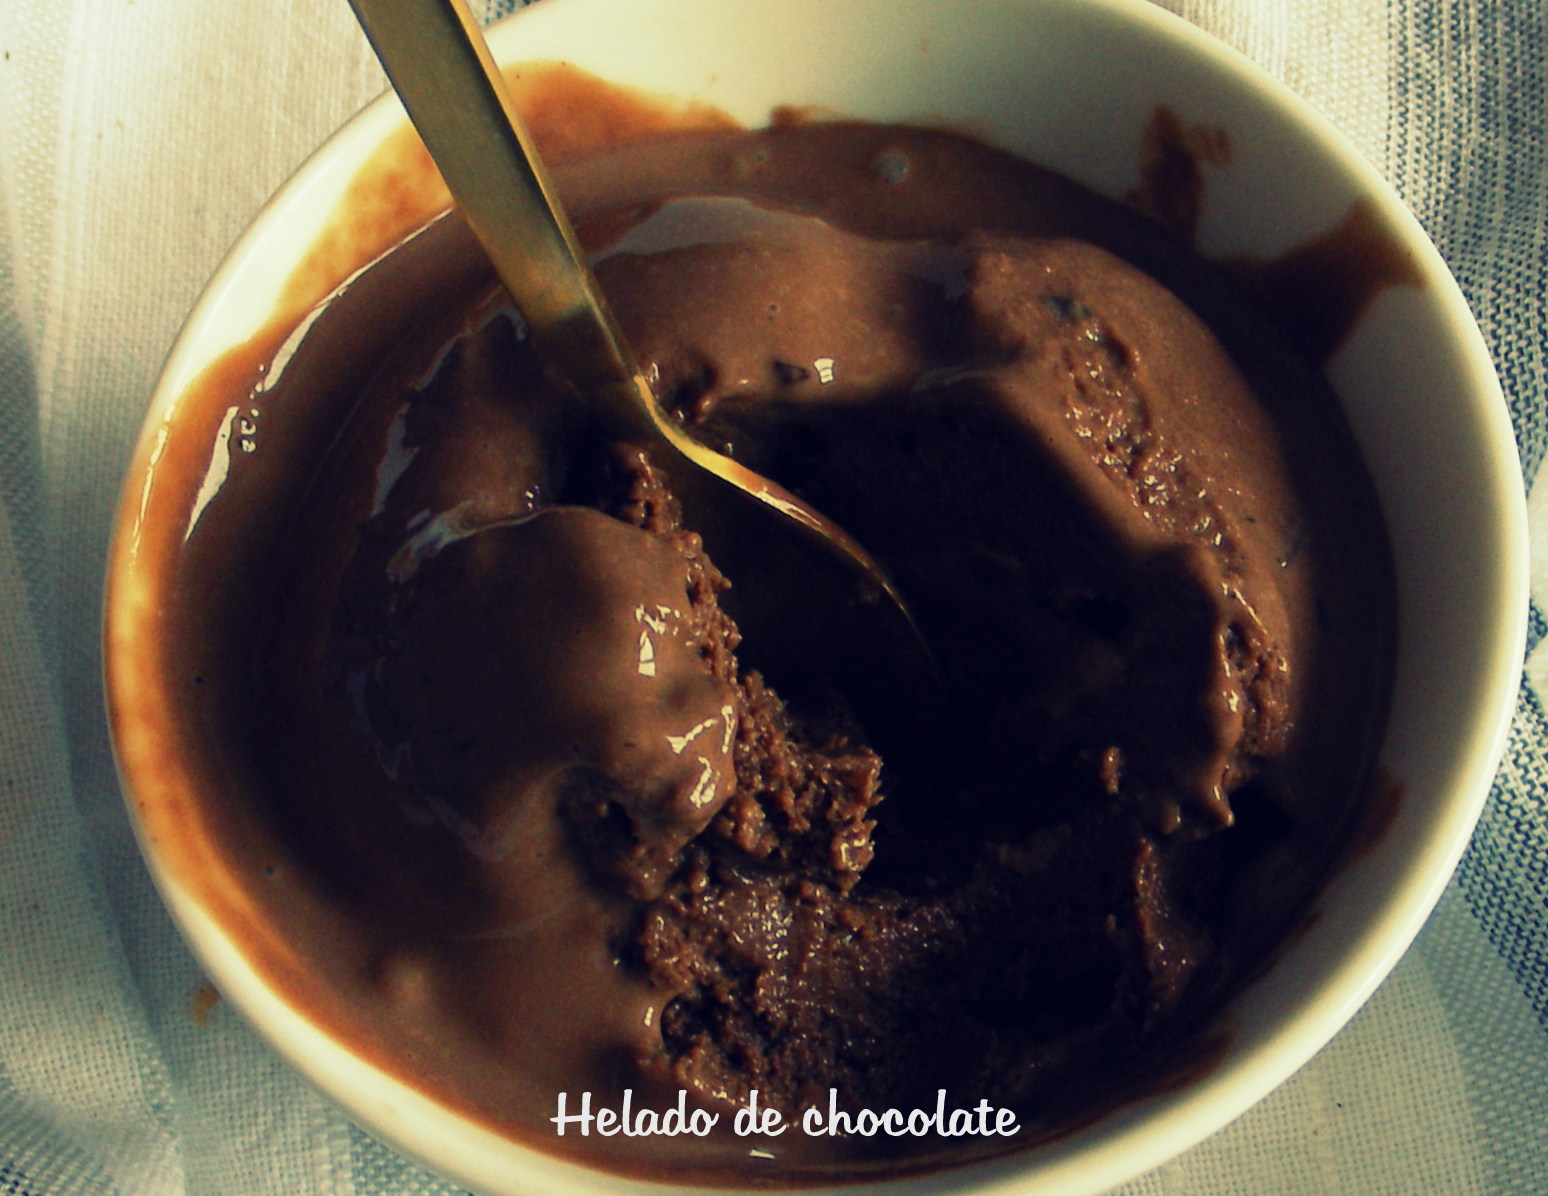 http://2.bp.blogspot.com/-BsbhfuaHgw8/T8YnPb4gPgI/AAAAAAAADXk/i-6sY1gwNVM/s1600/Helado+de+chocolate.jpg